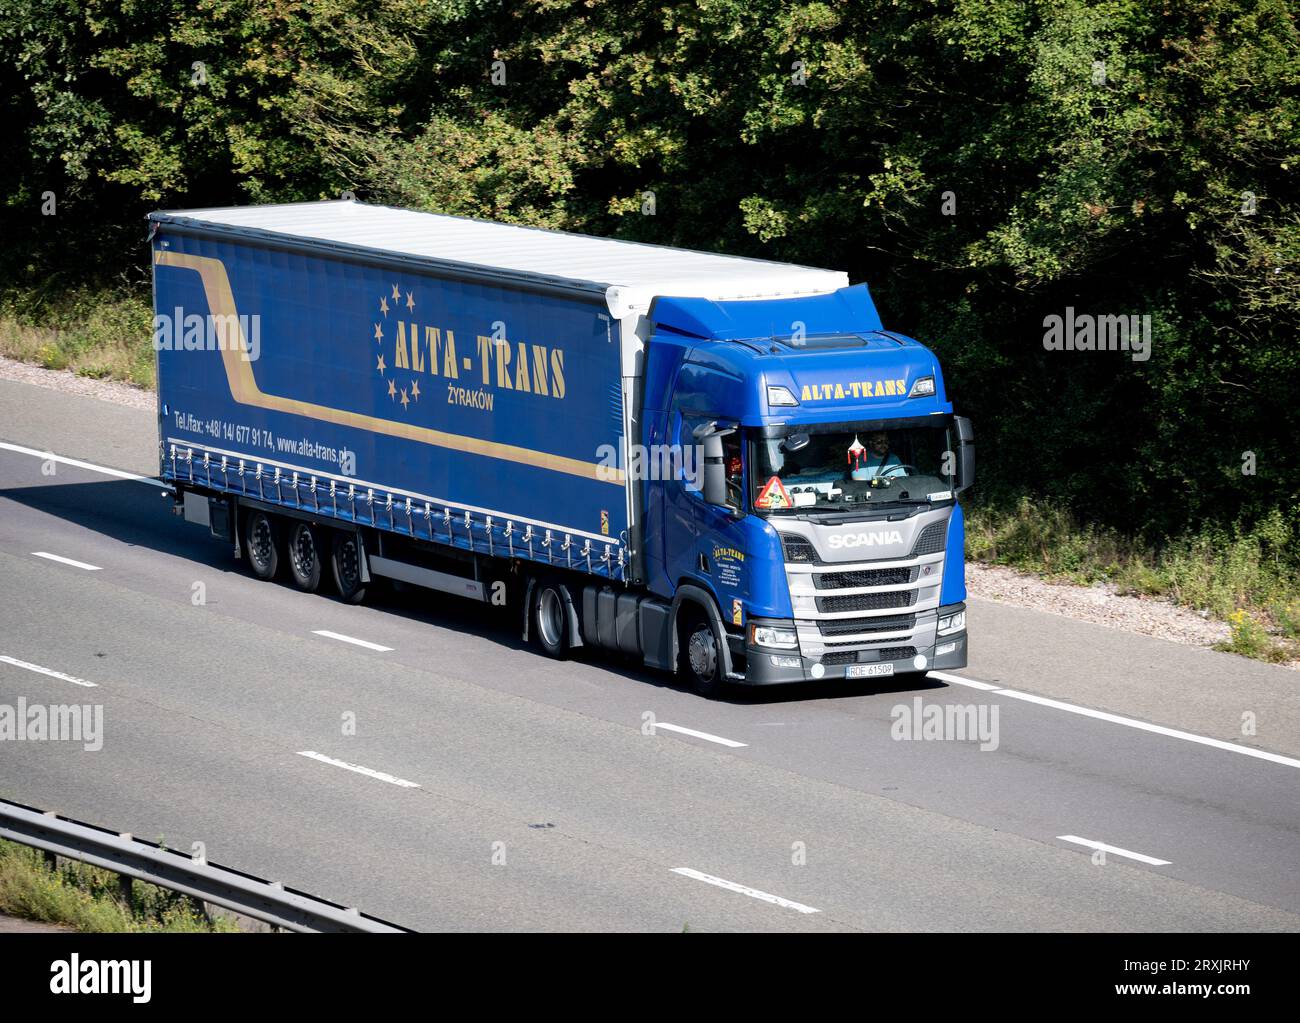 Alta-Trans lorry on the M40 motorway, Warwickshire, UK Stock Photo